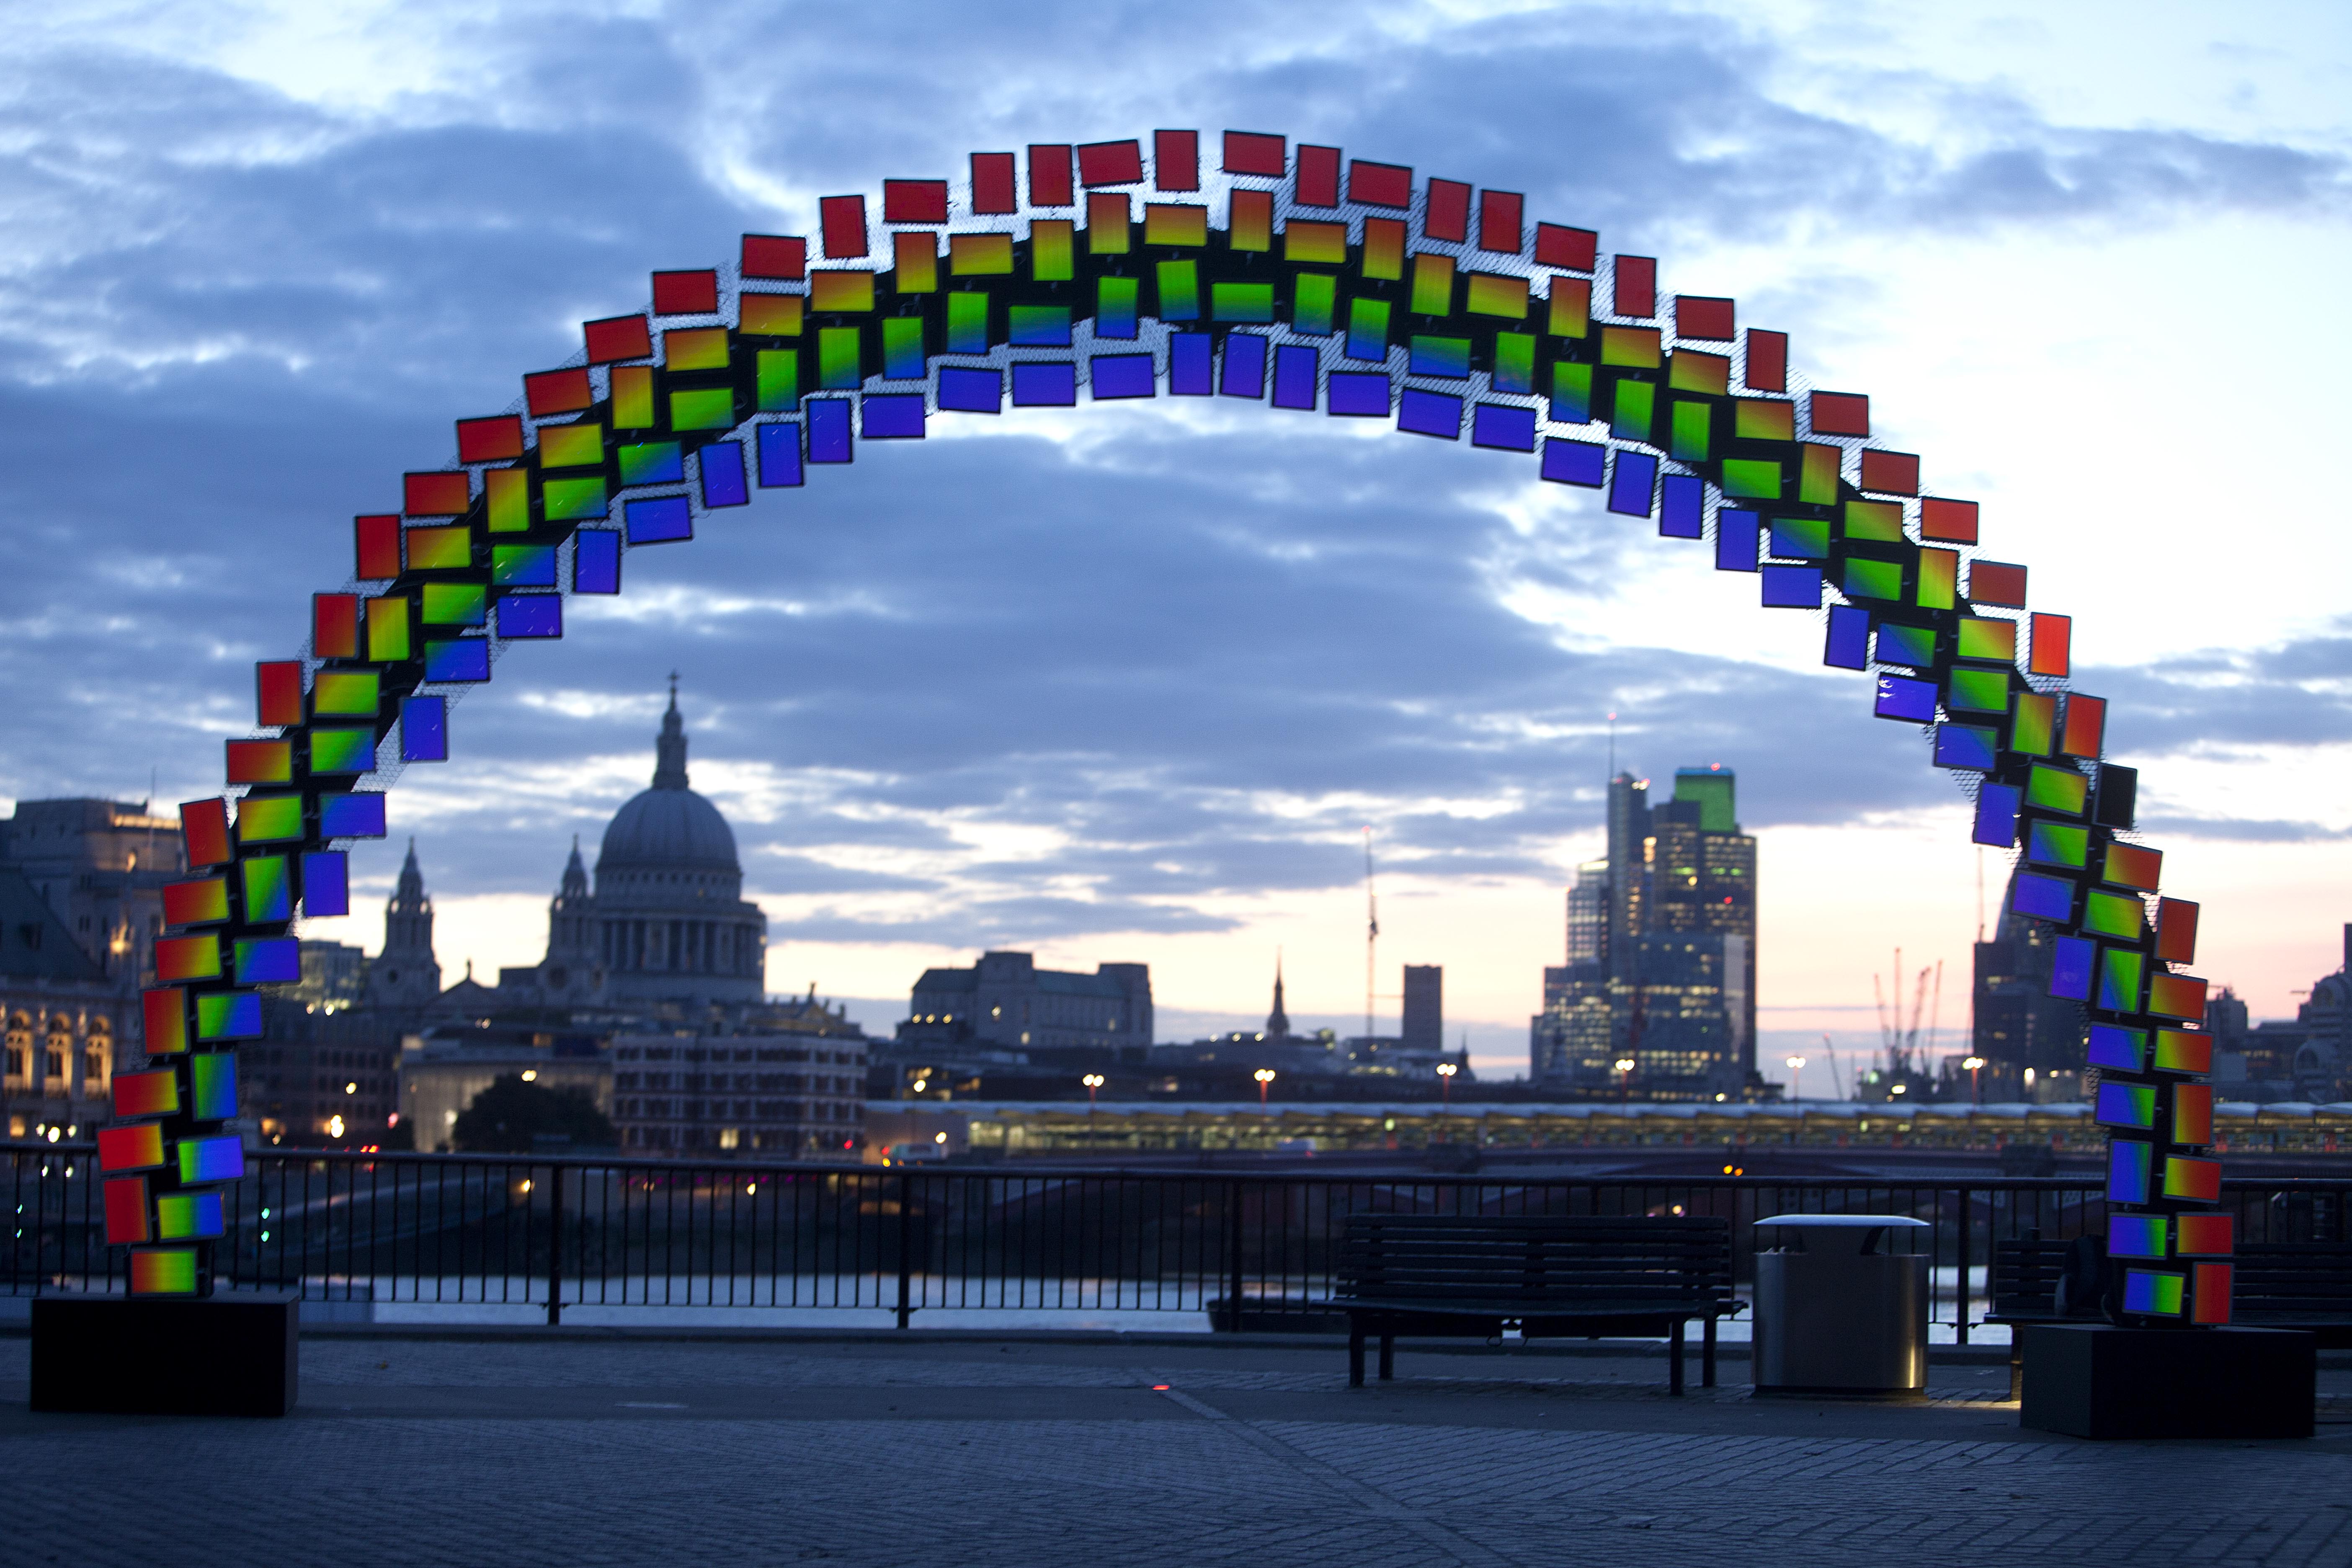 boom reviews - Samsung Galaxy Tab S midnight rainbow on London's South Bank